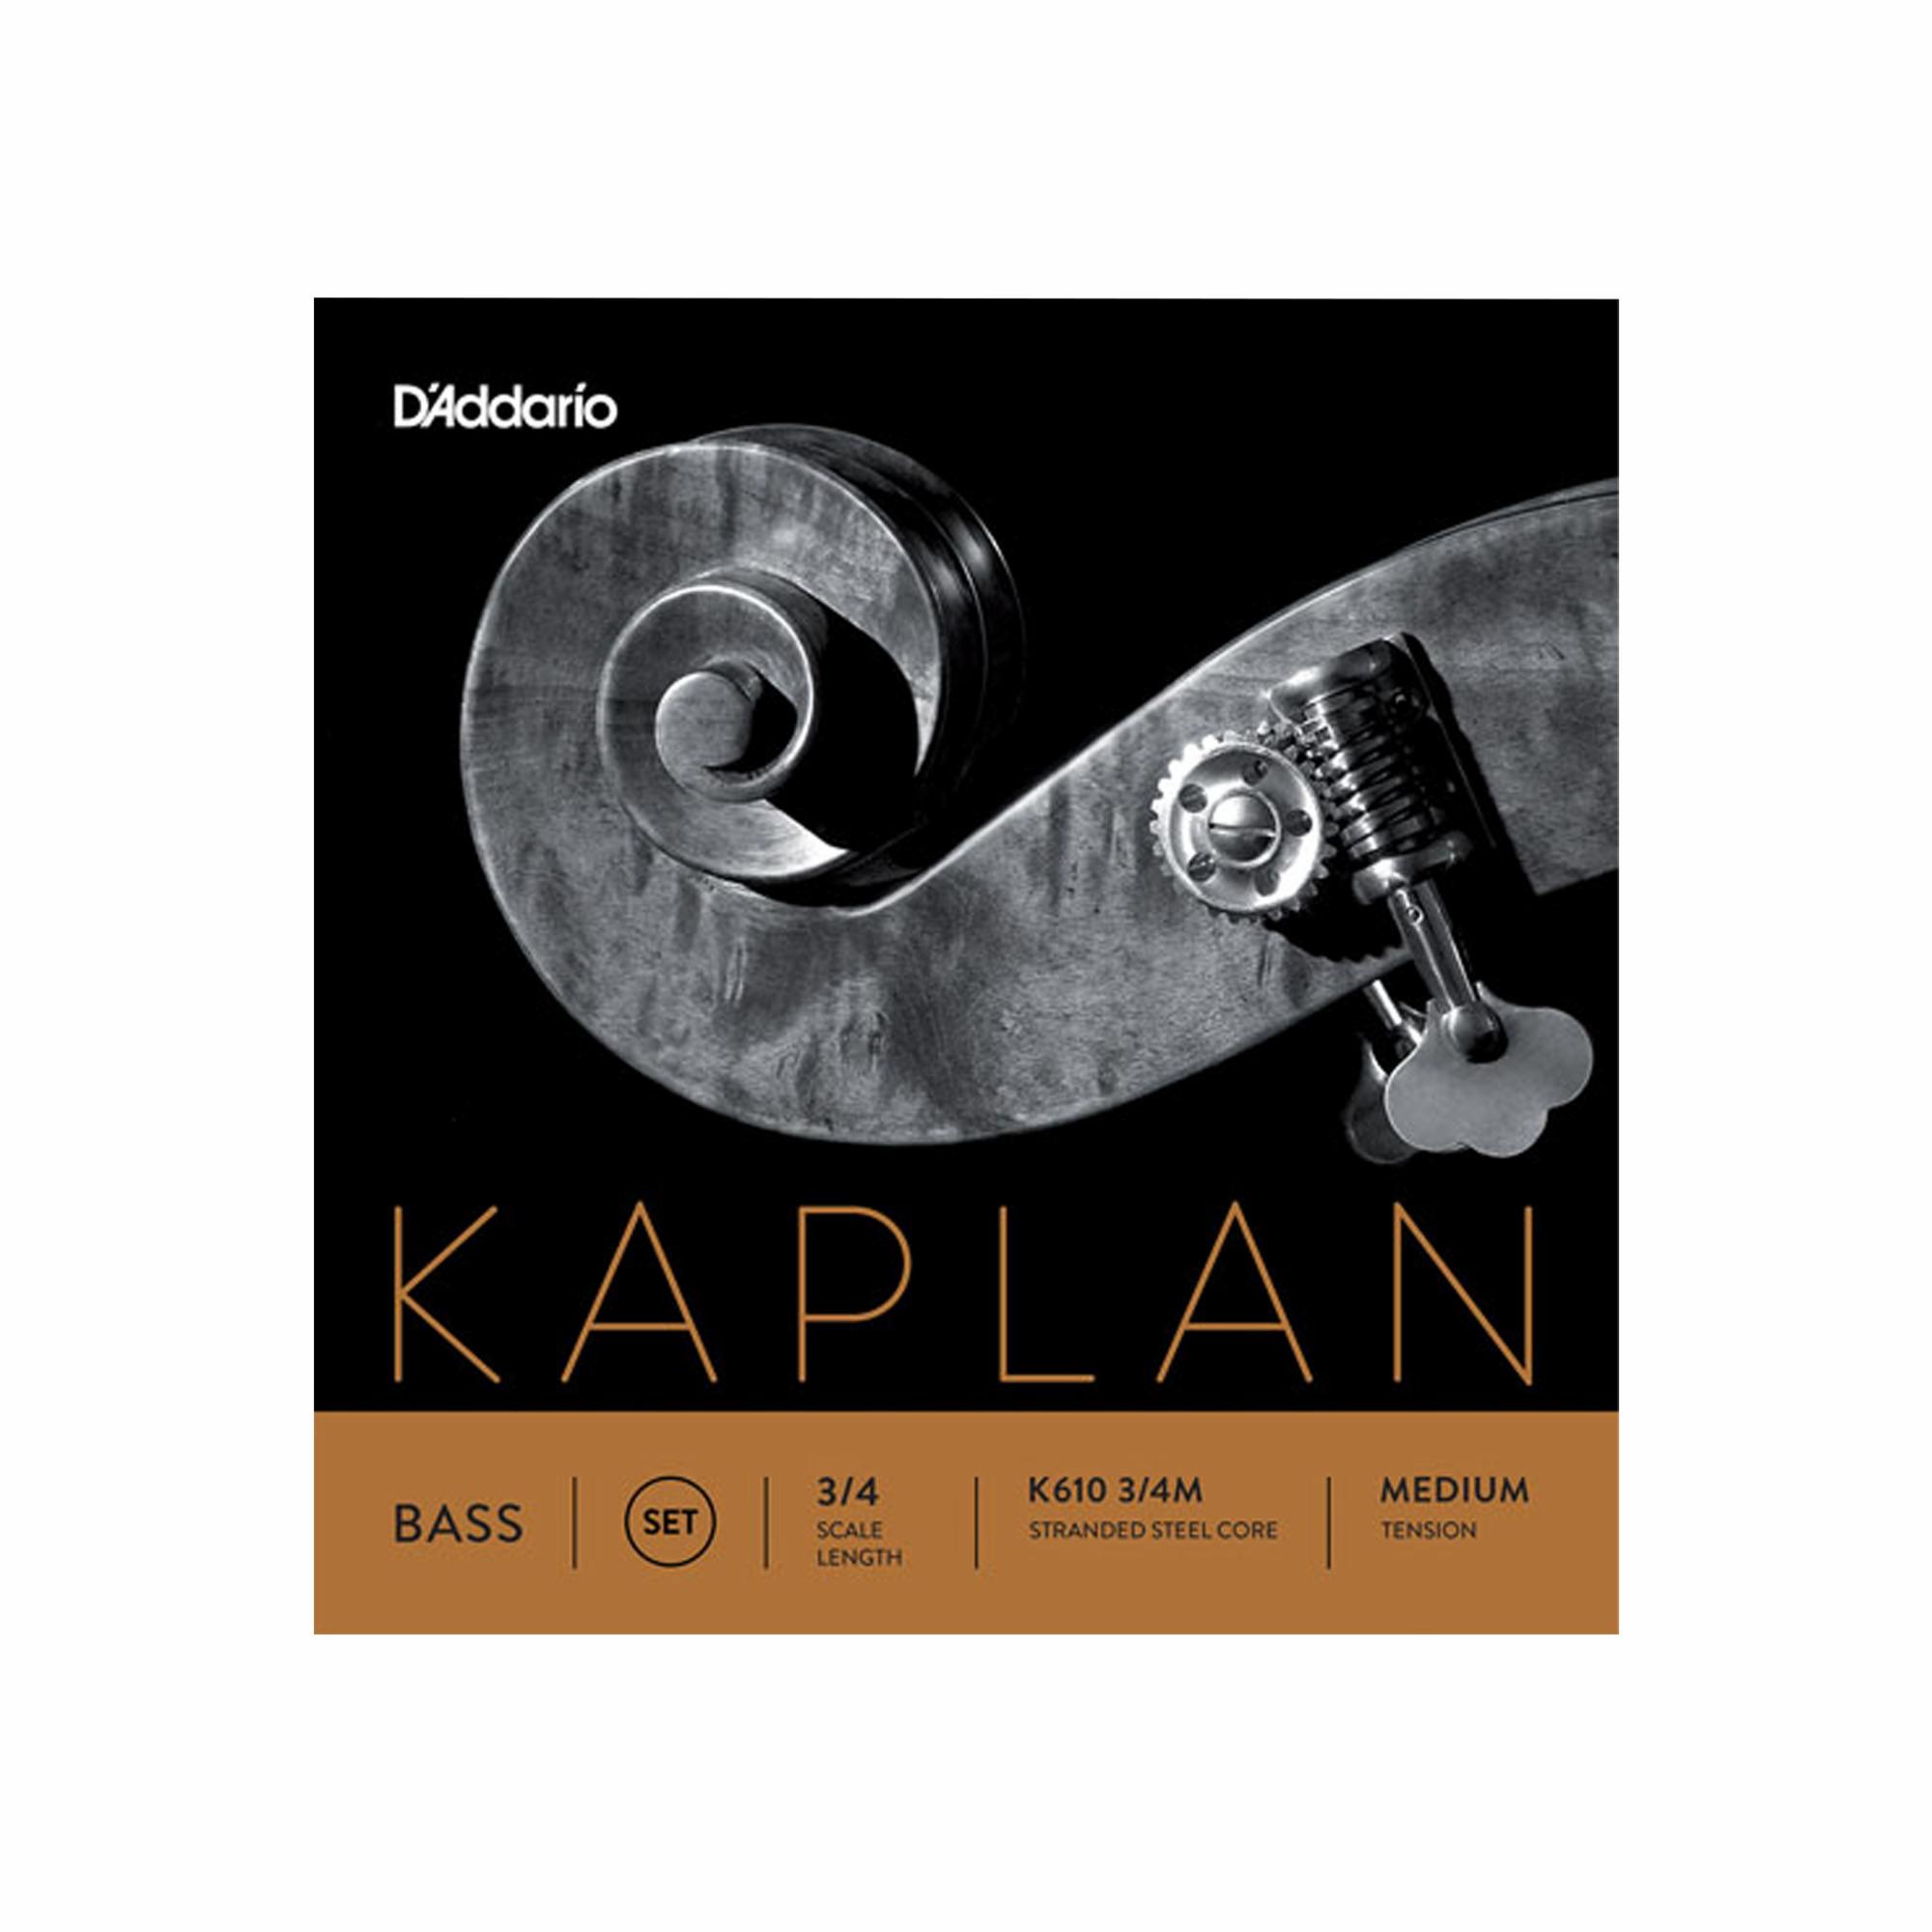 D'Addario Kaplan Bass Strings